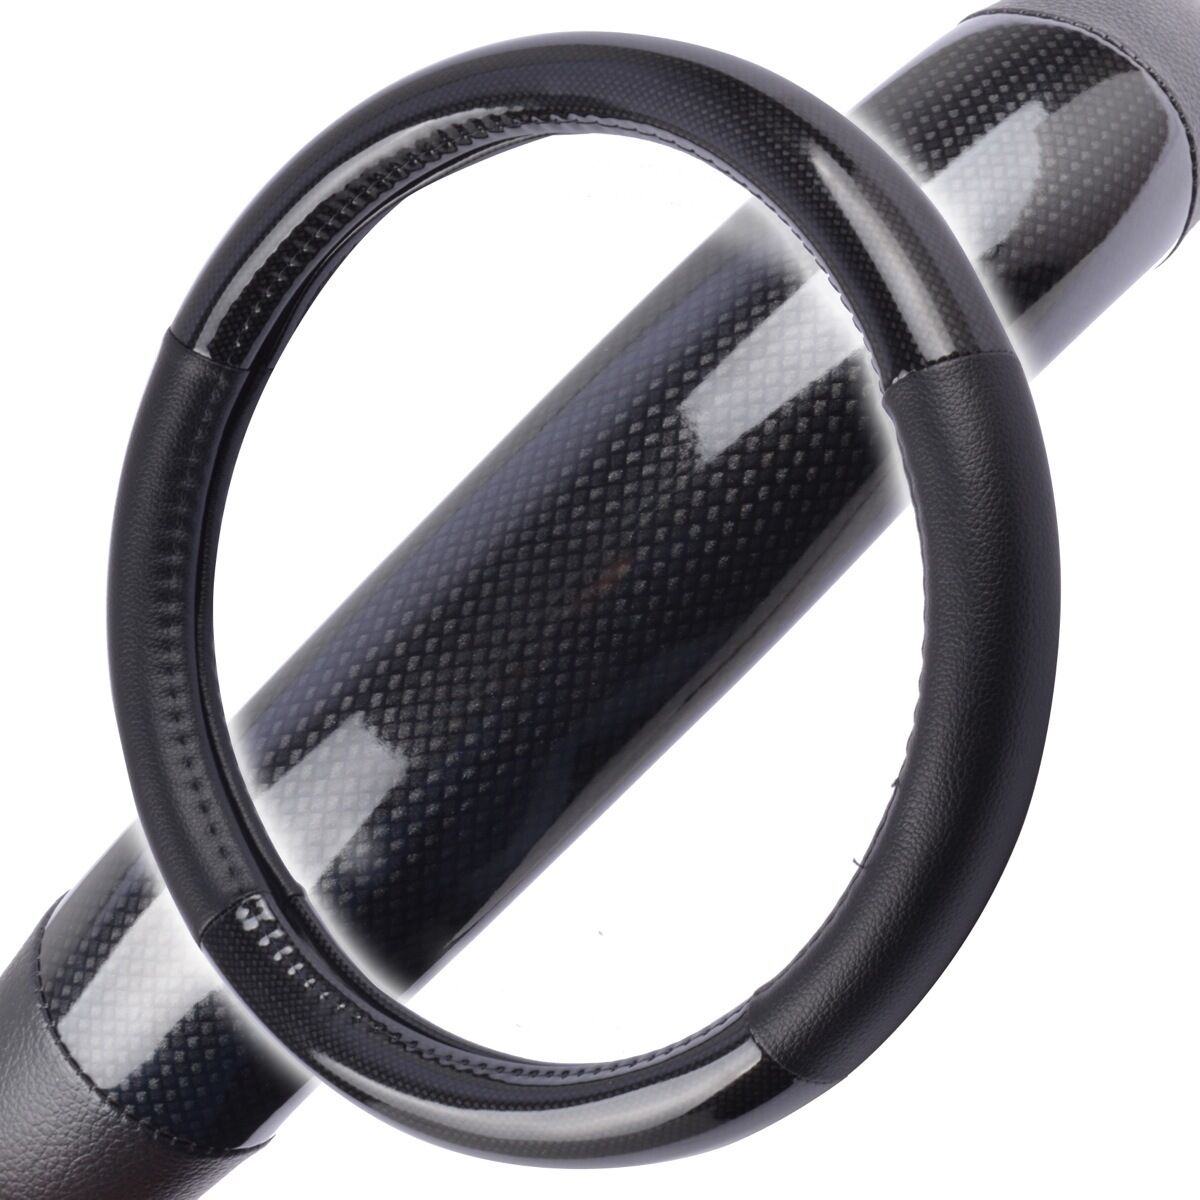 Odorless Carbon Fiber Car Steering Wheel Cover Echo Tech Black Motor Trend